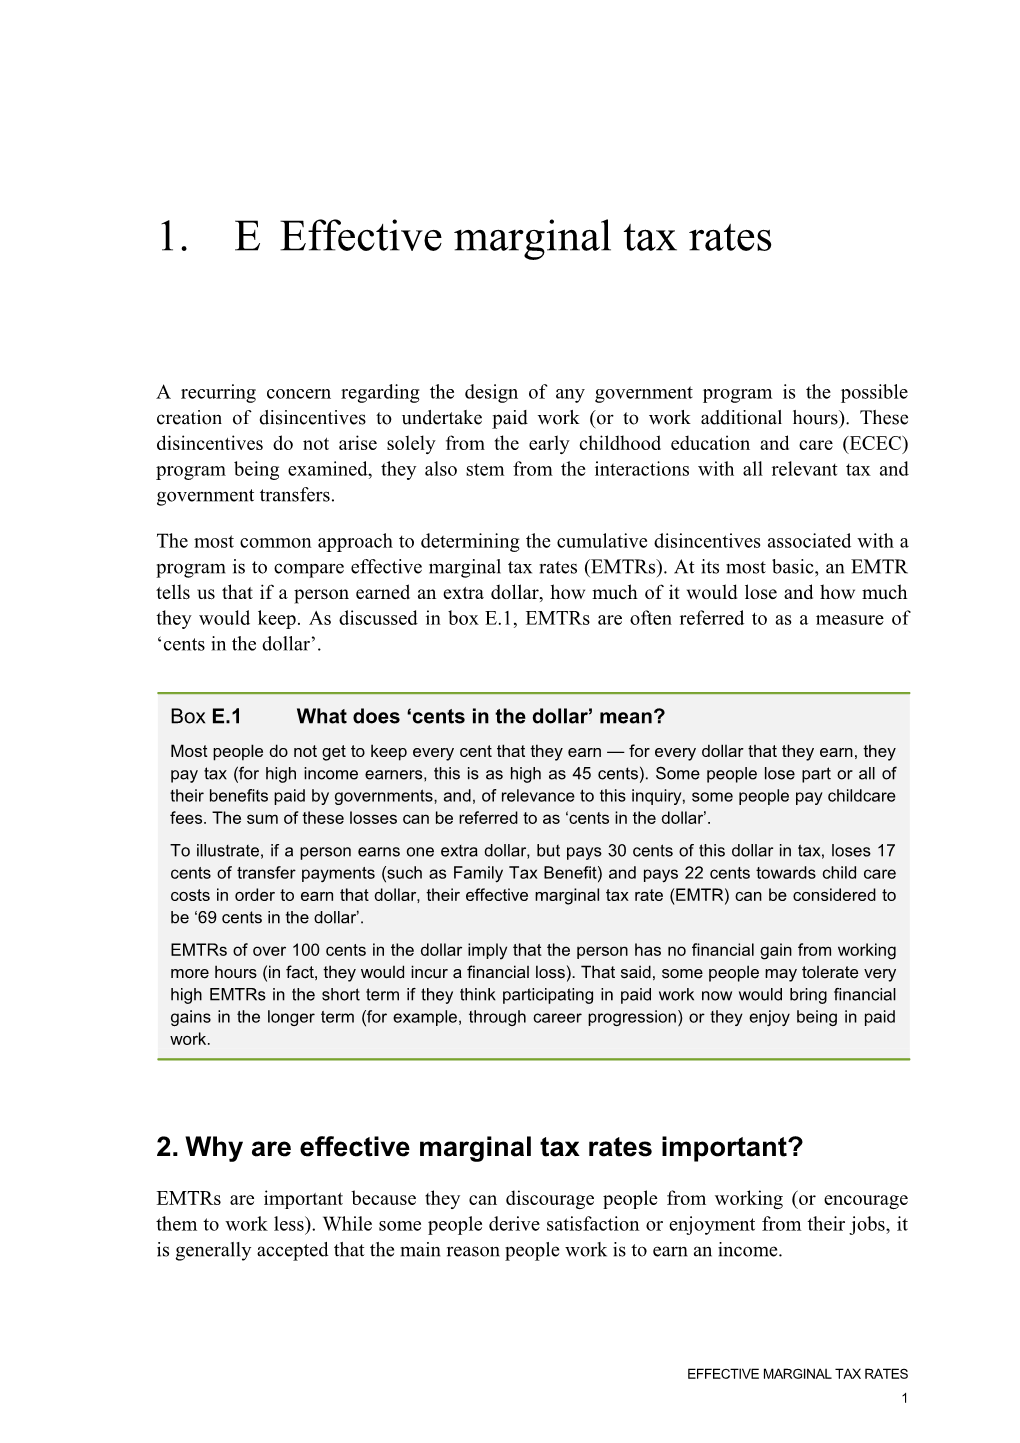 Effective Marginal Tax Rates